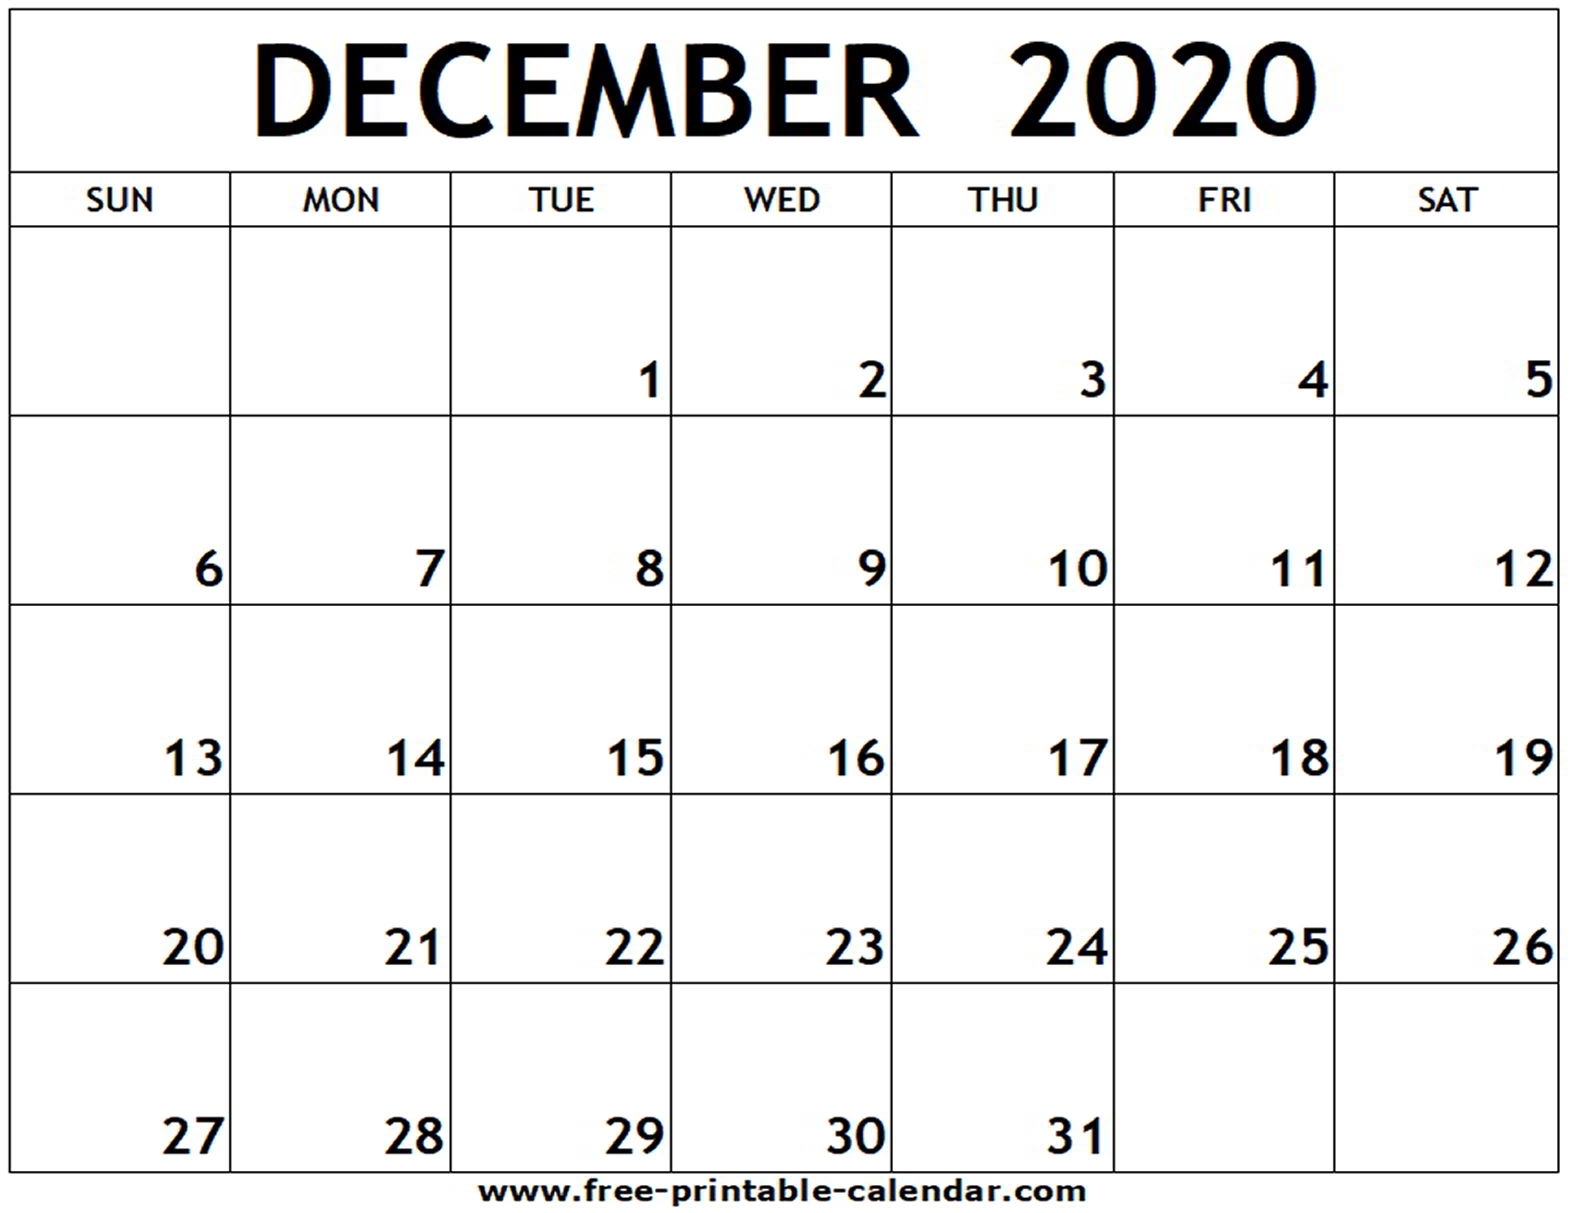 December 2020 Printable Calendar - Free-Printable-Calendar